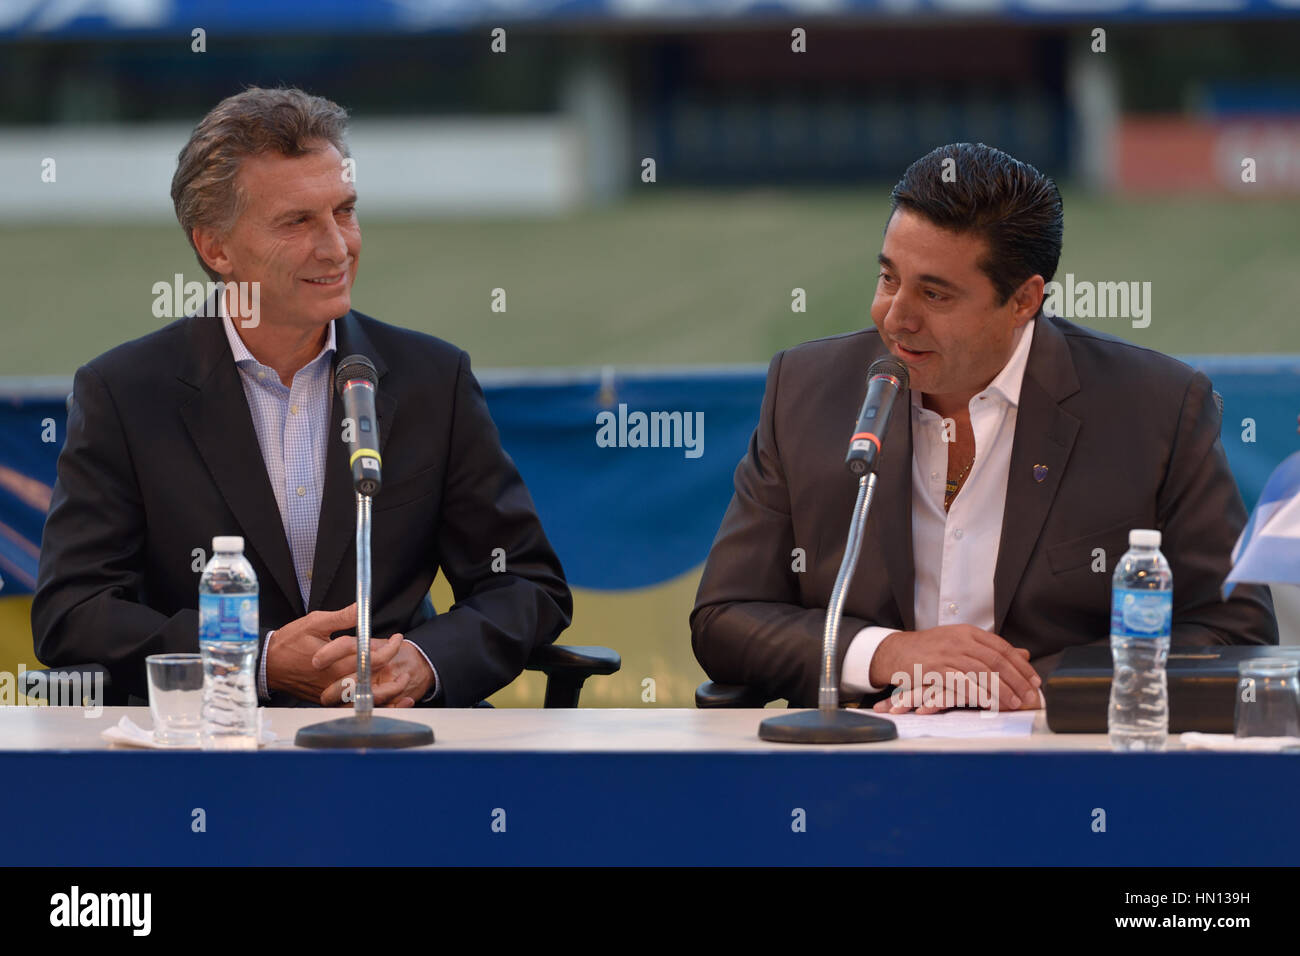 BUENOS AIRES, ARGENTINA - DEC 2, 2015: President of Argentina Mauricio Macri (L) and president of Boca Juniors' Daniel Angilici (R). Stock Photo